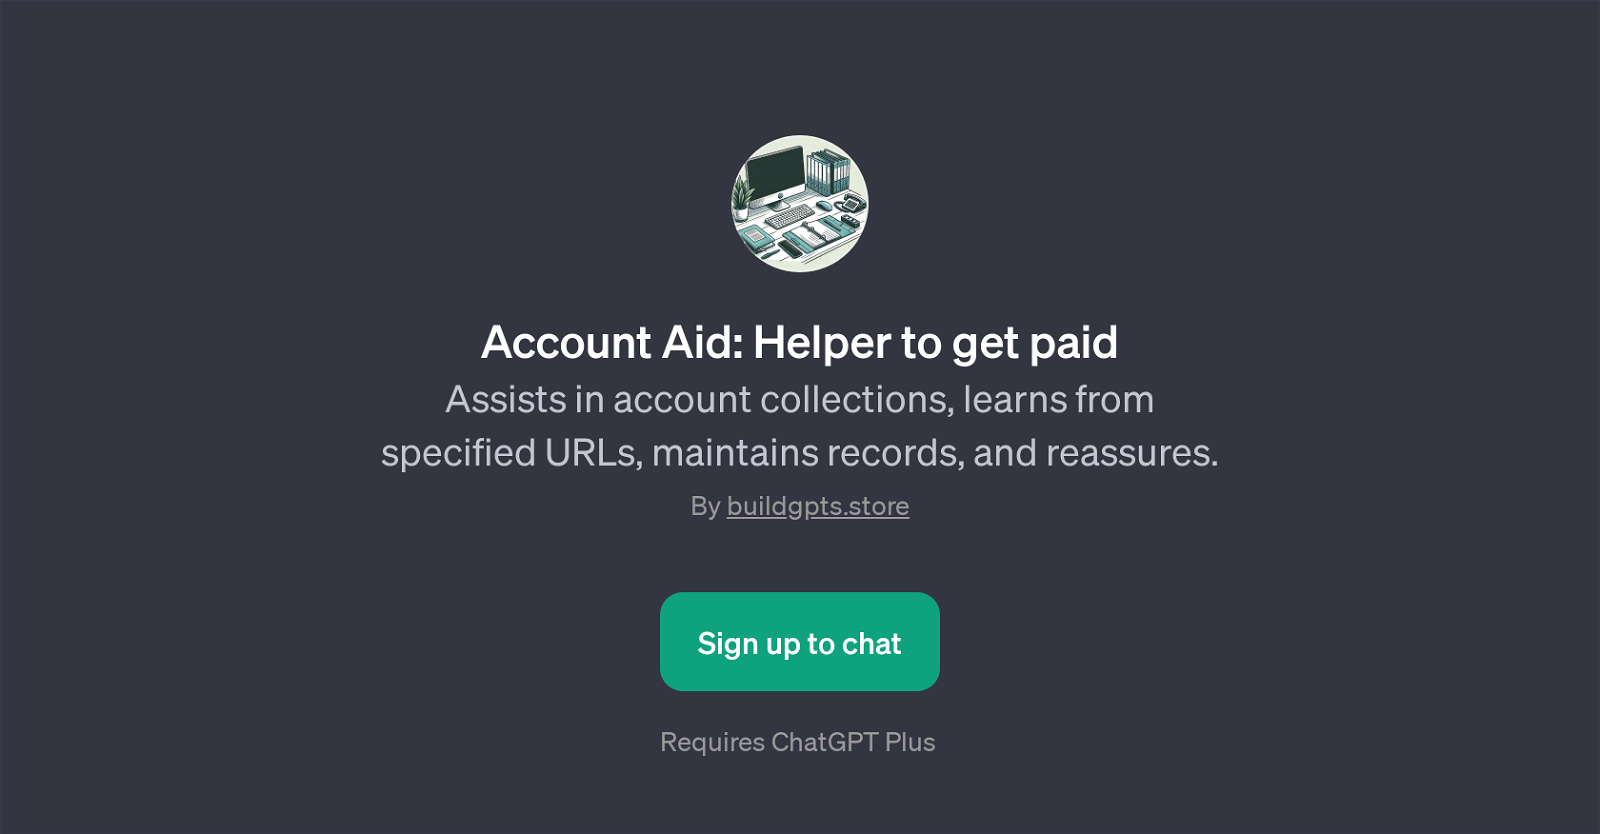 Account Aid website